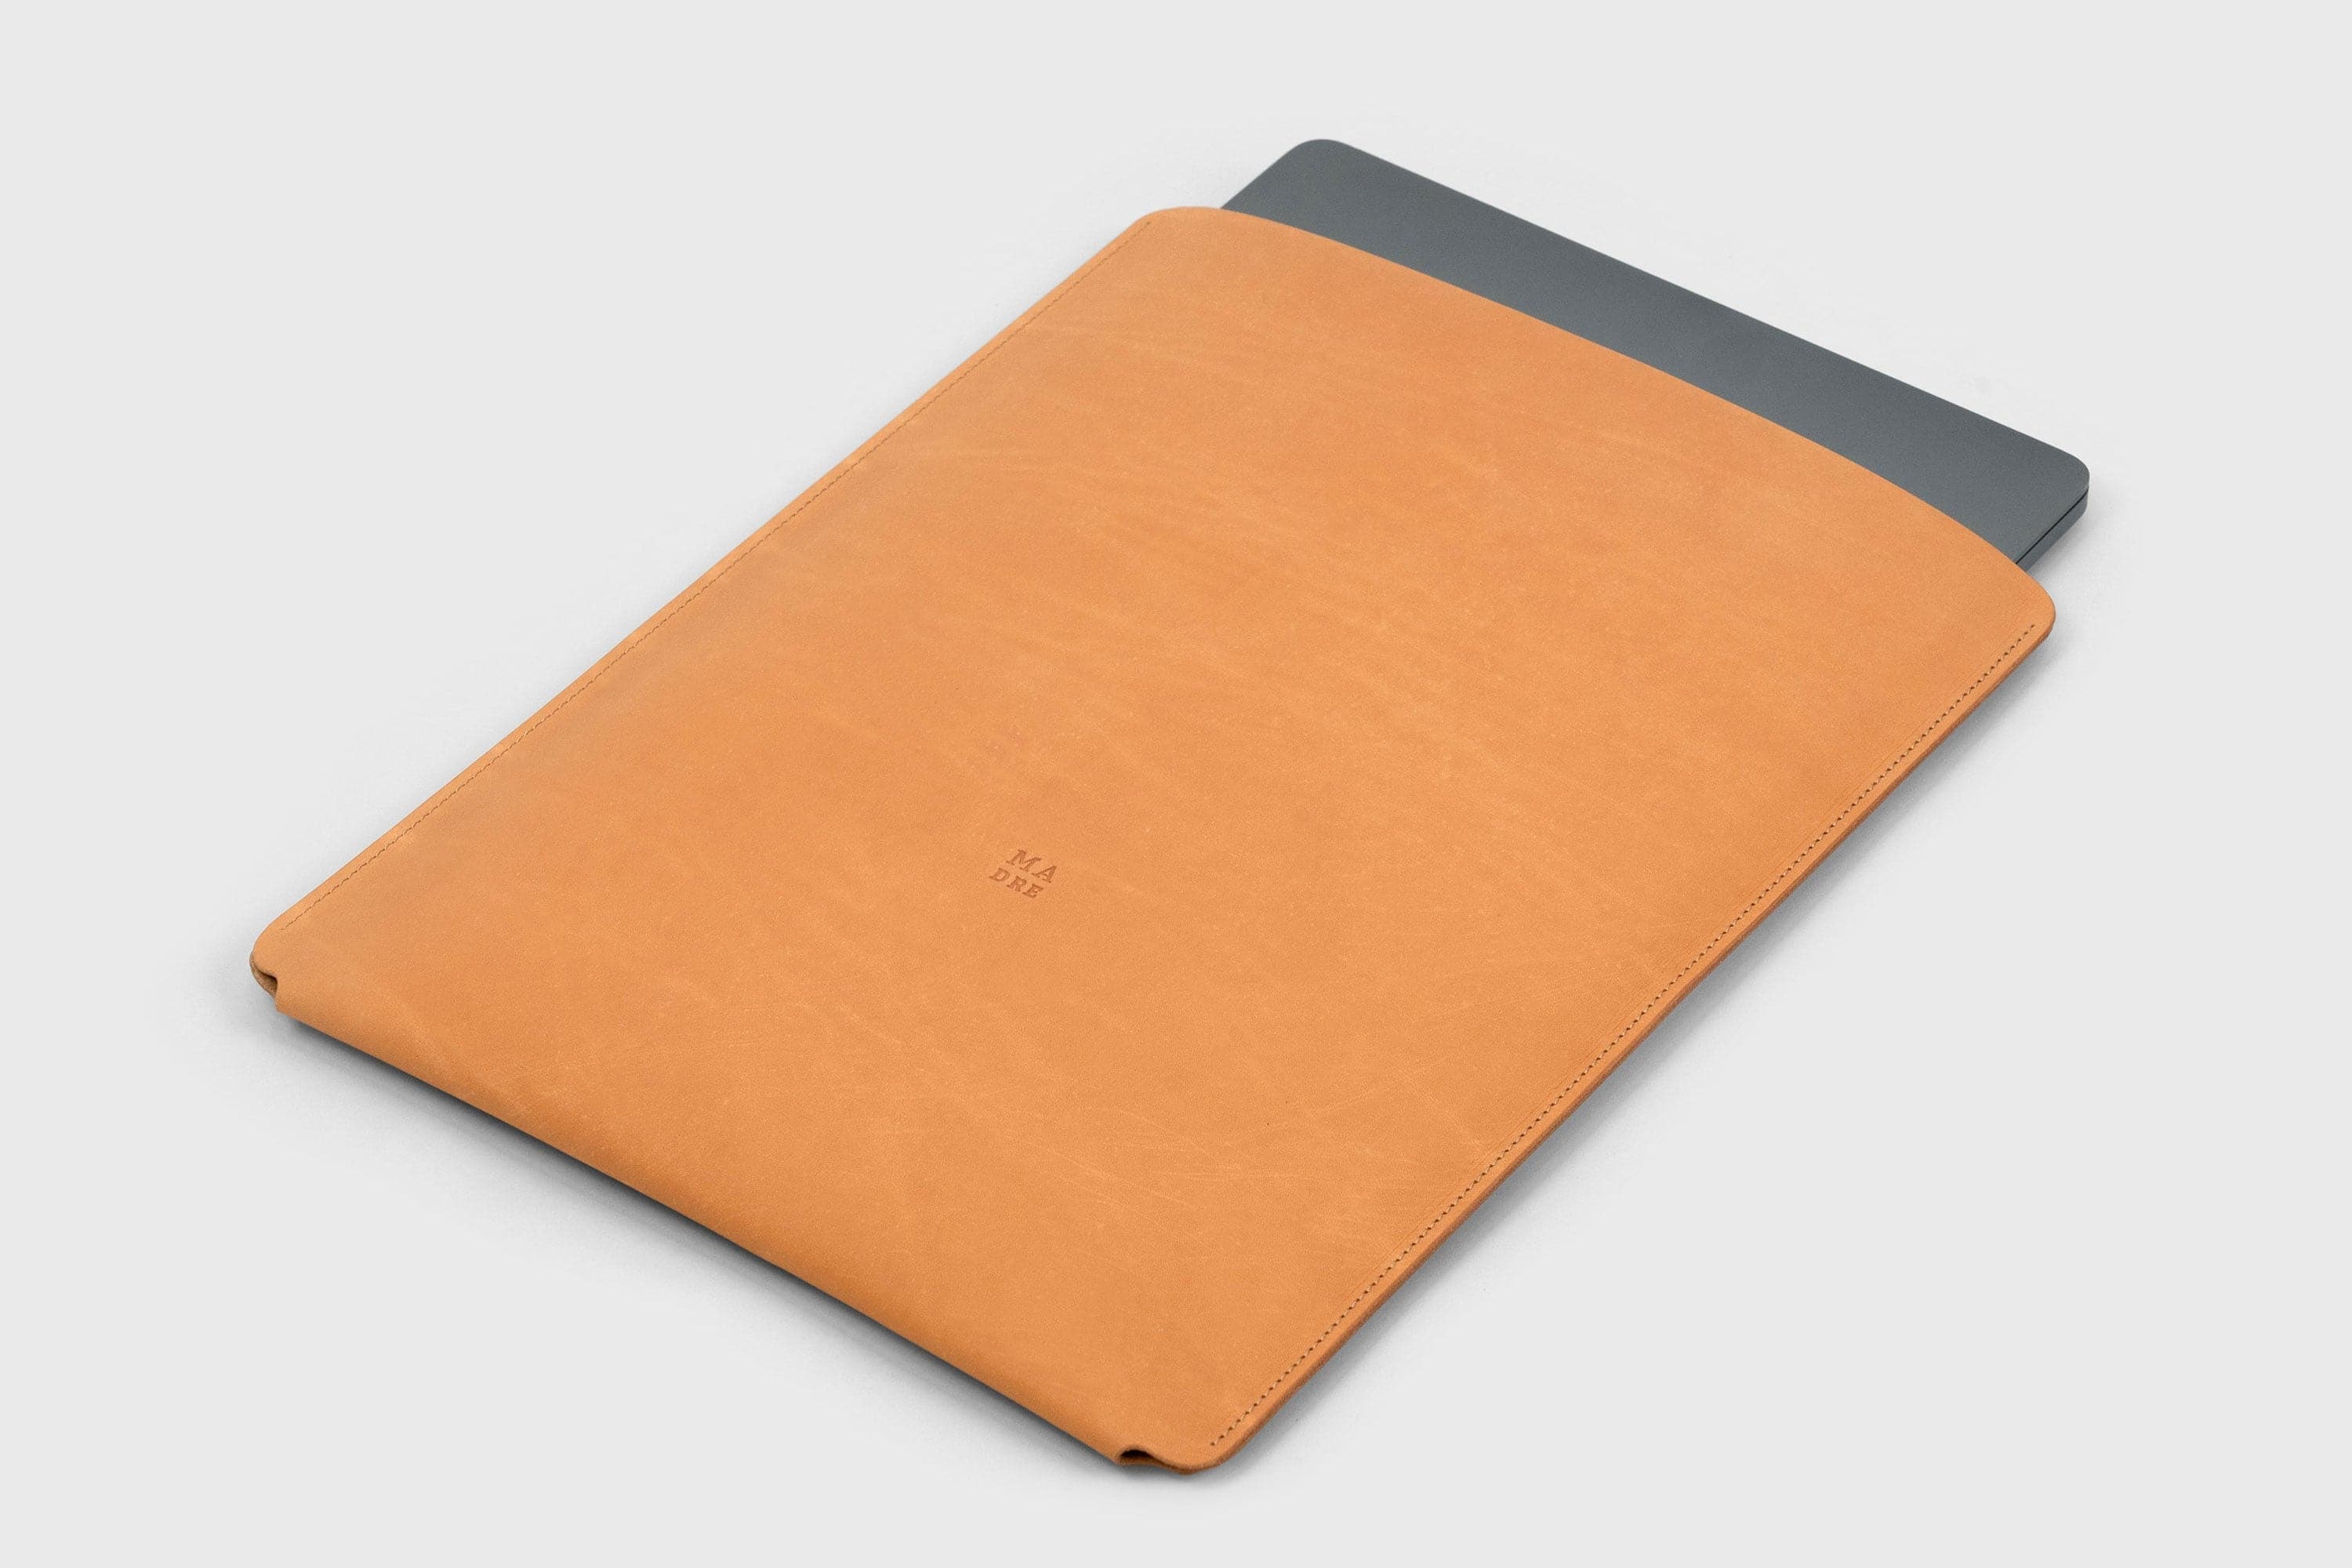 MacBook Pro 14 Inch Sleeve Leather Slip Case Bag Brown 2021 Manuel Dreesmann Atelier Madre Barcelona